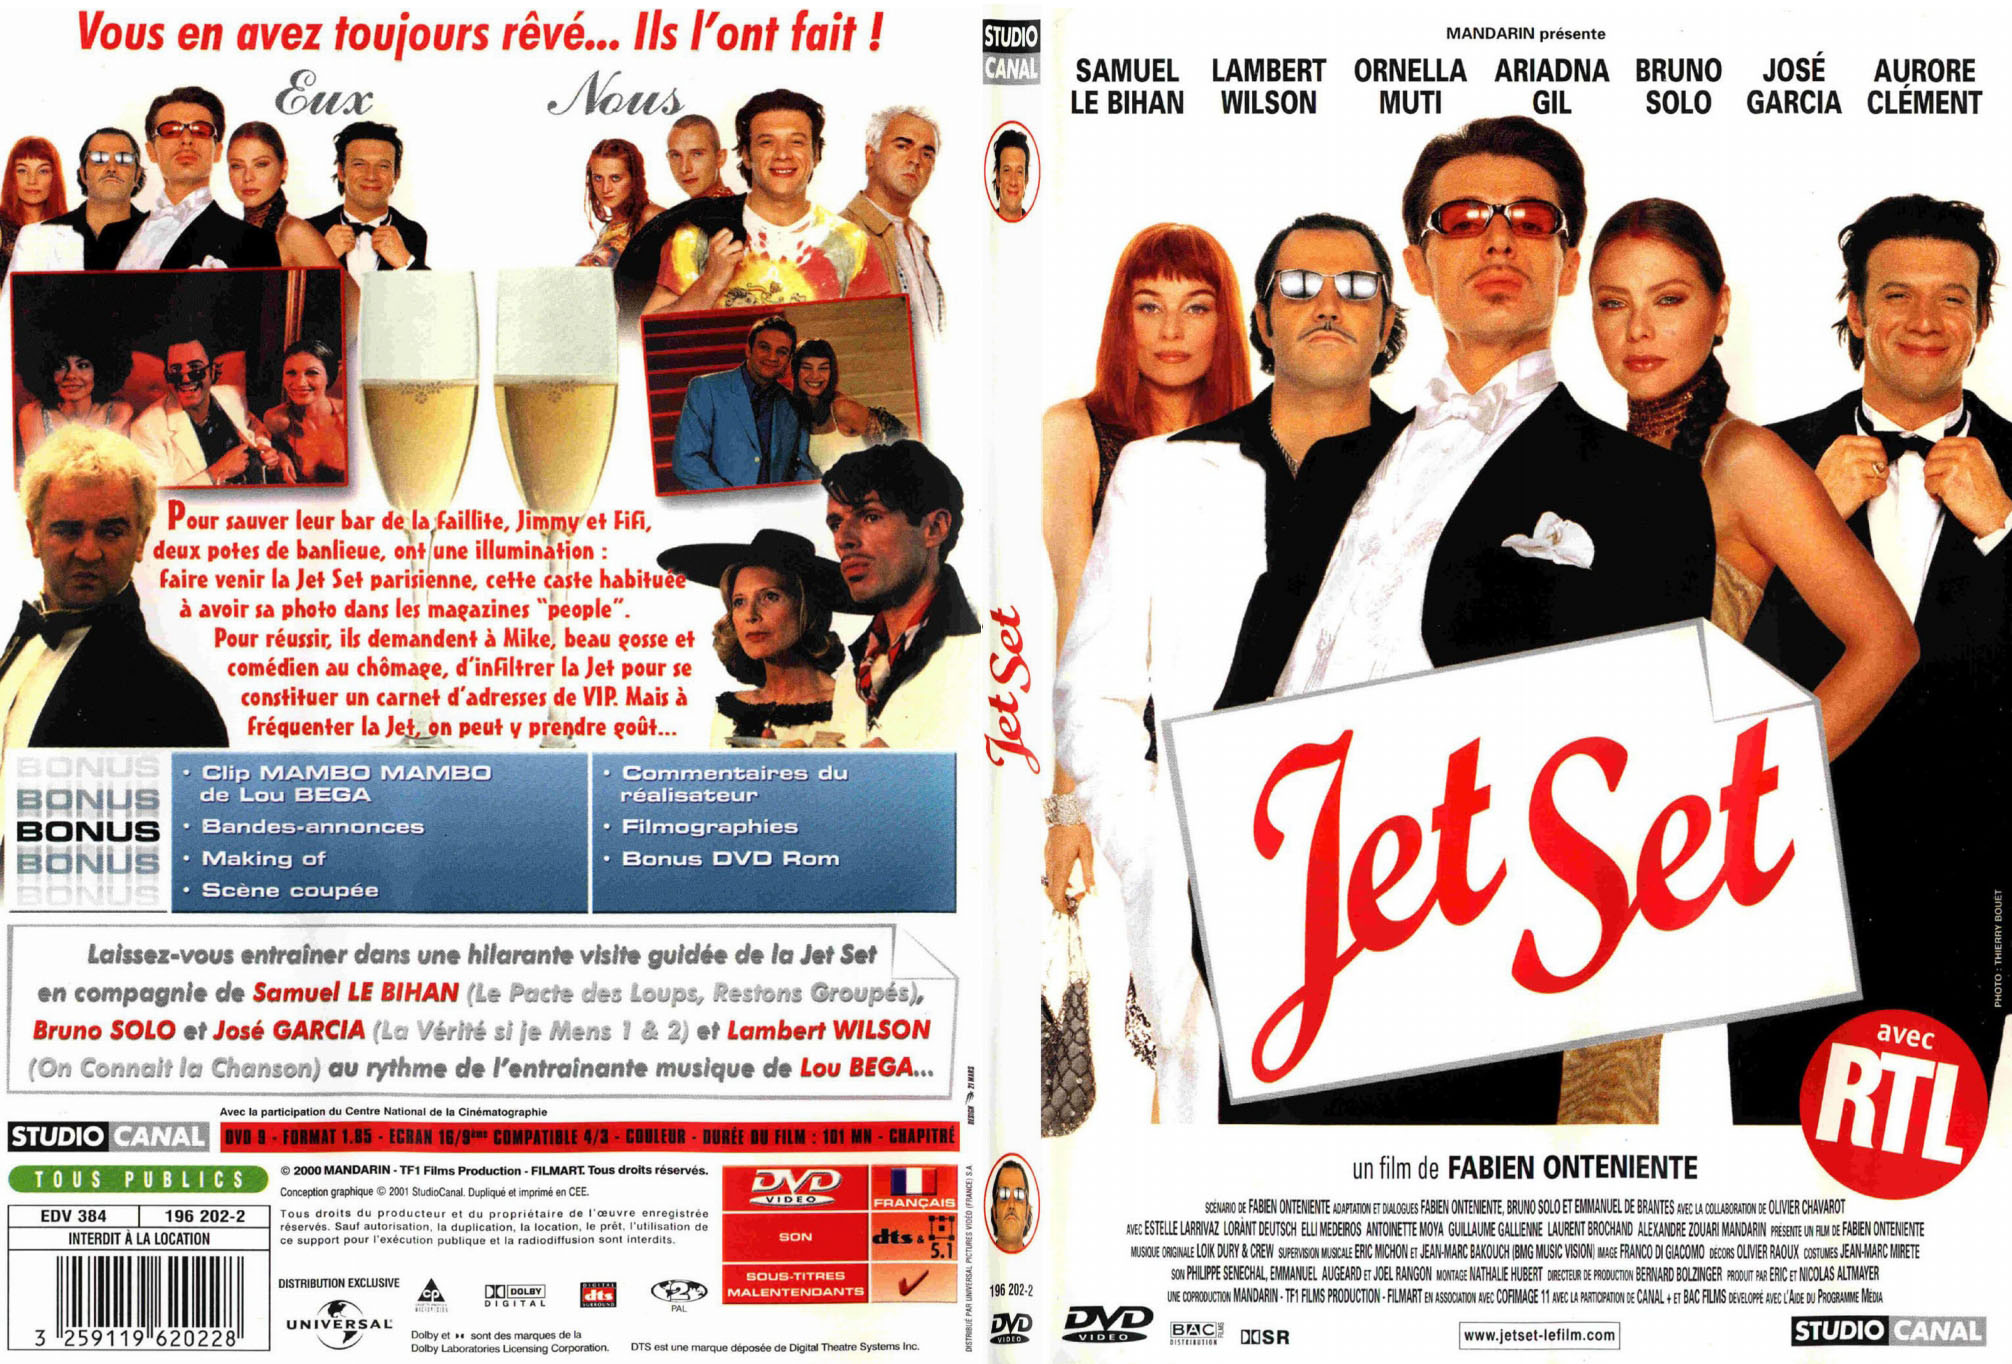 Jaquette DVD Jet set - SLIM